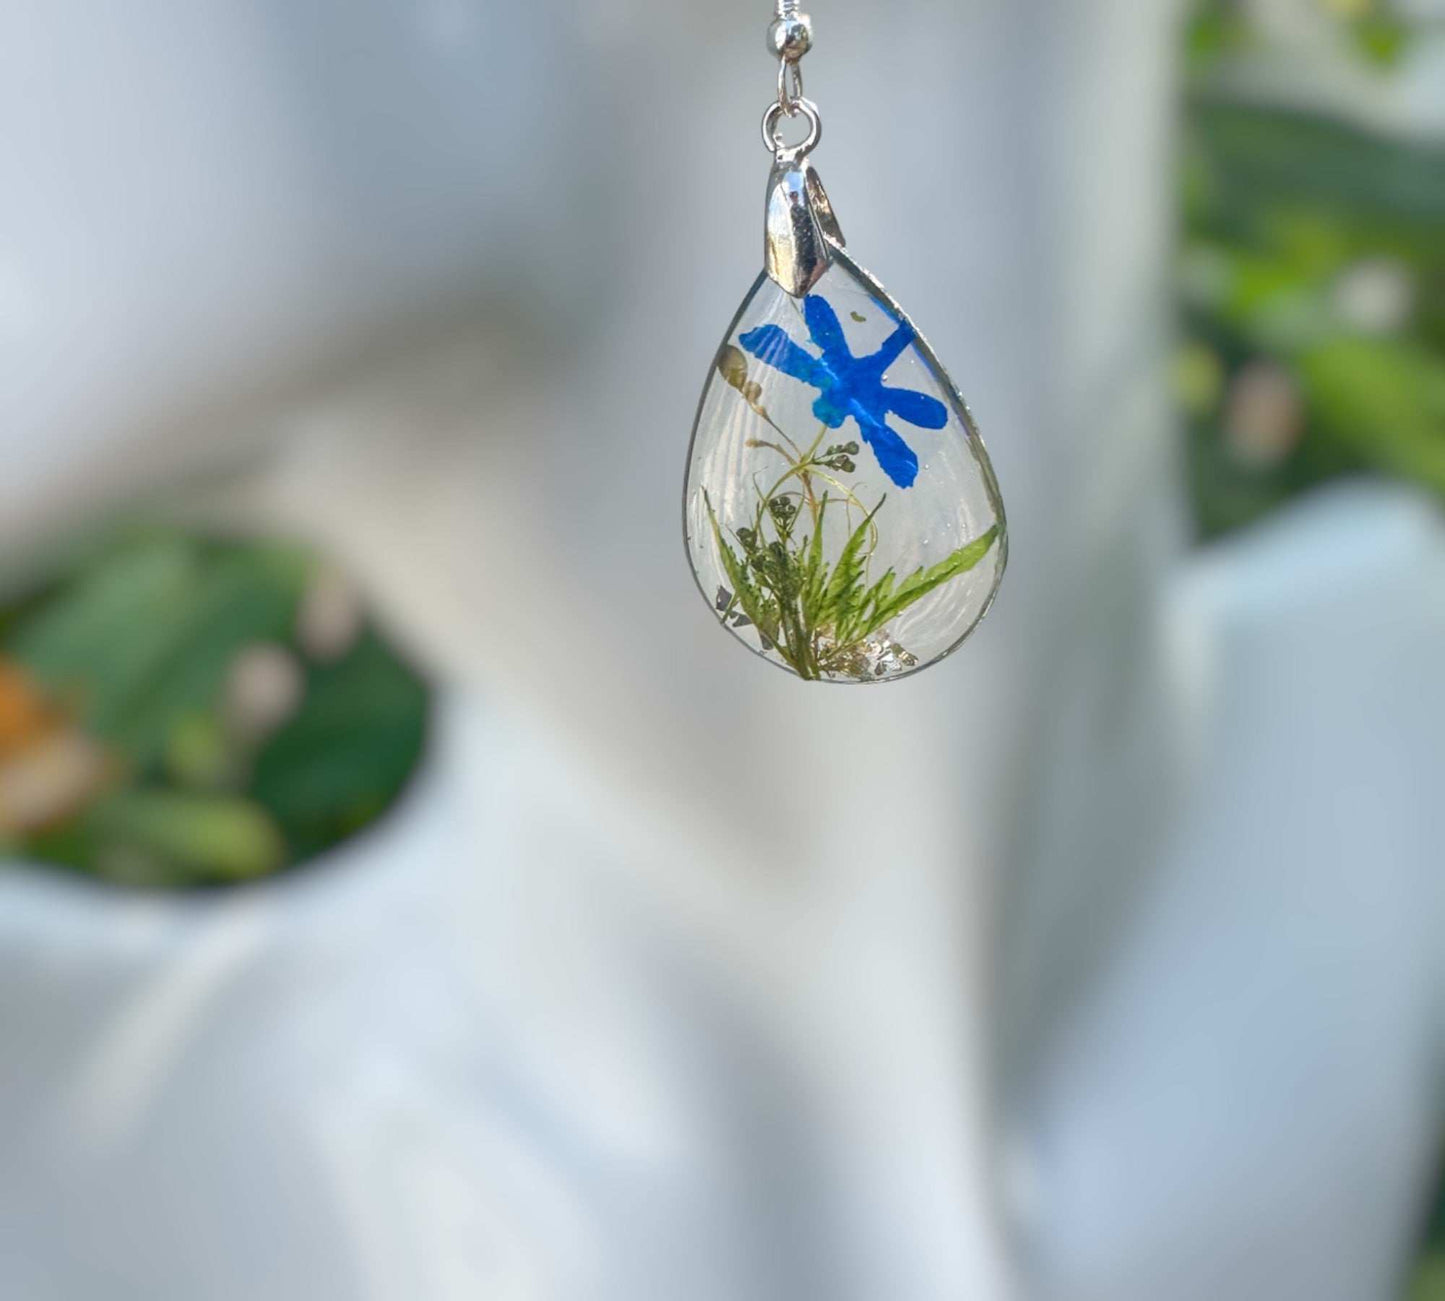 Enchanted Dragonfly Garden Earrings - Handmade Pressed Flower Teardrops